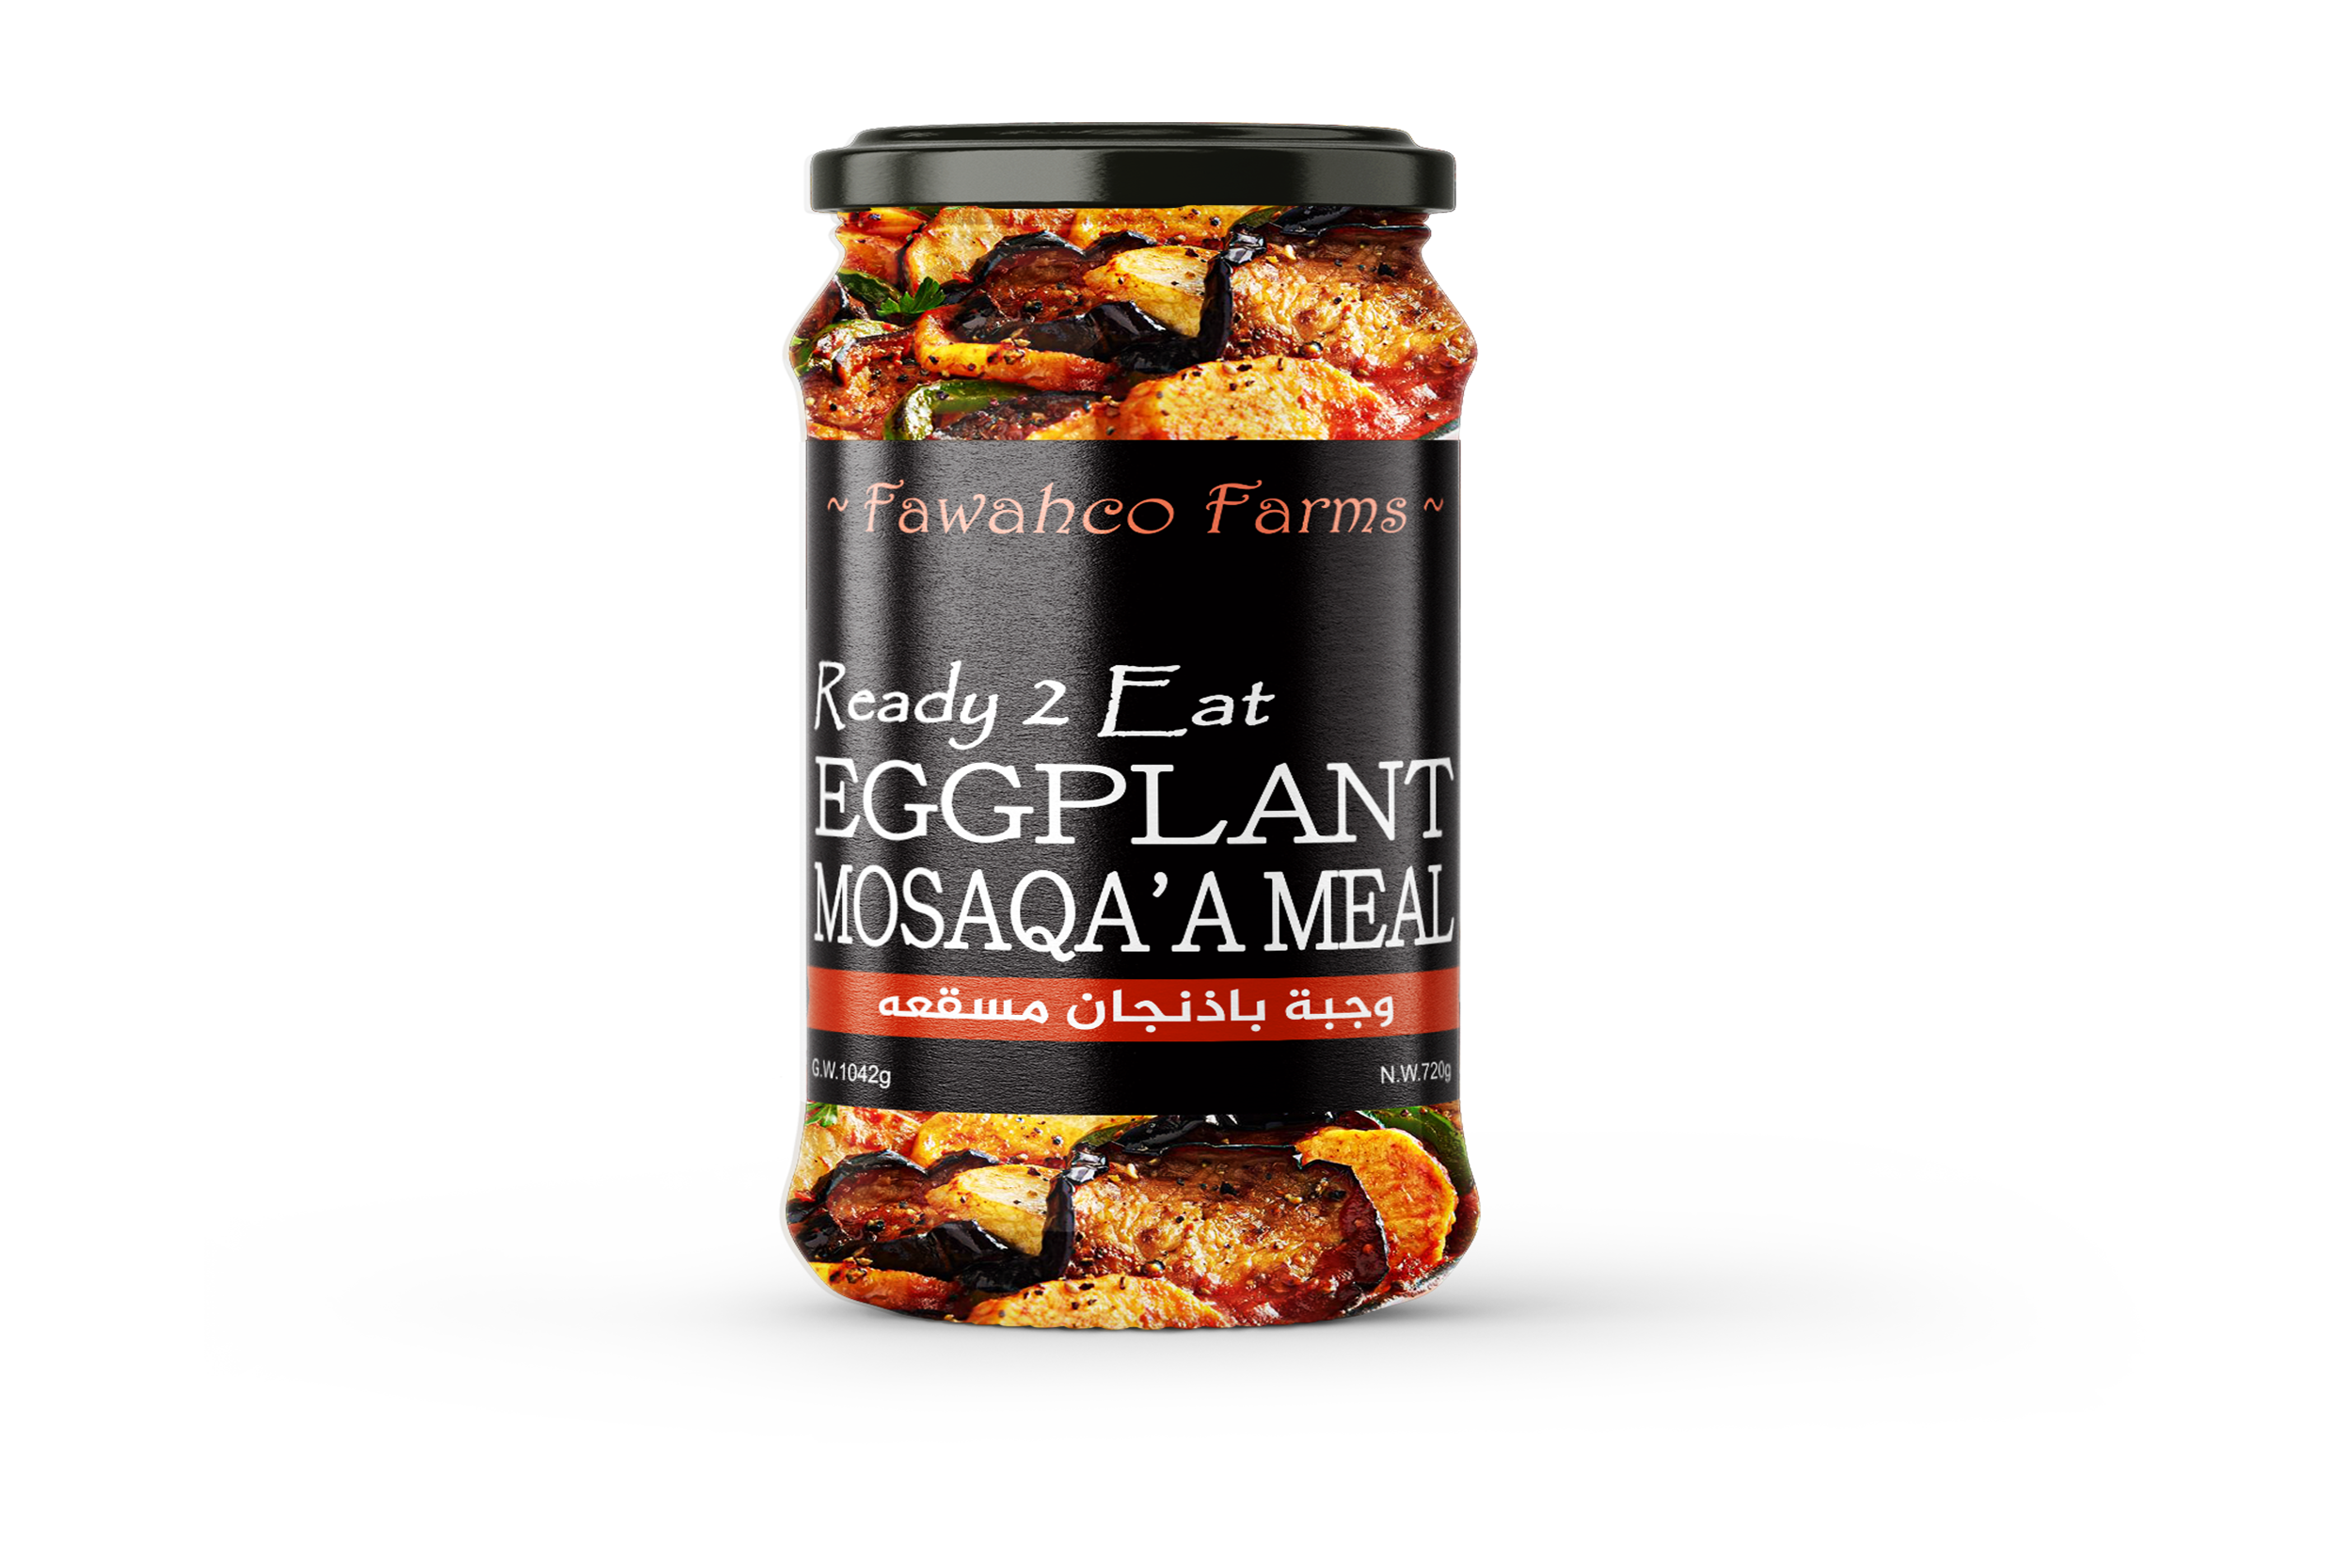 Eggplant Mosaqaa Meal